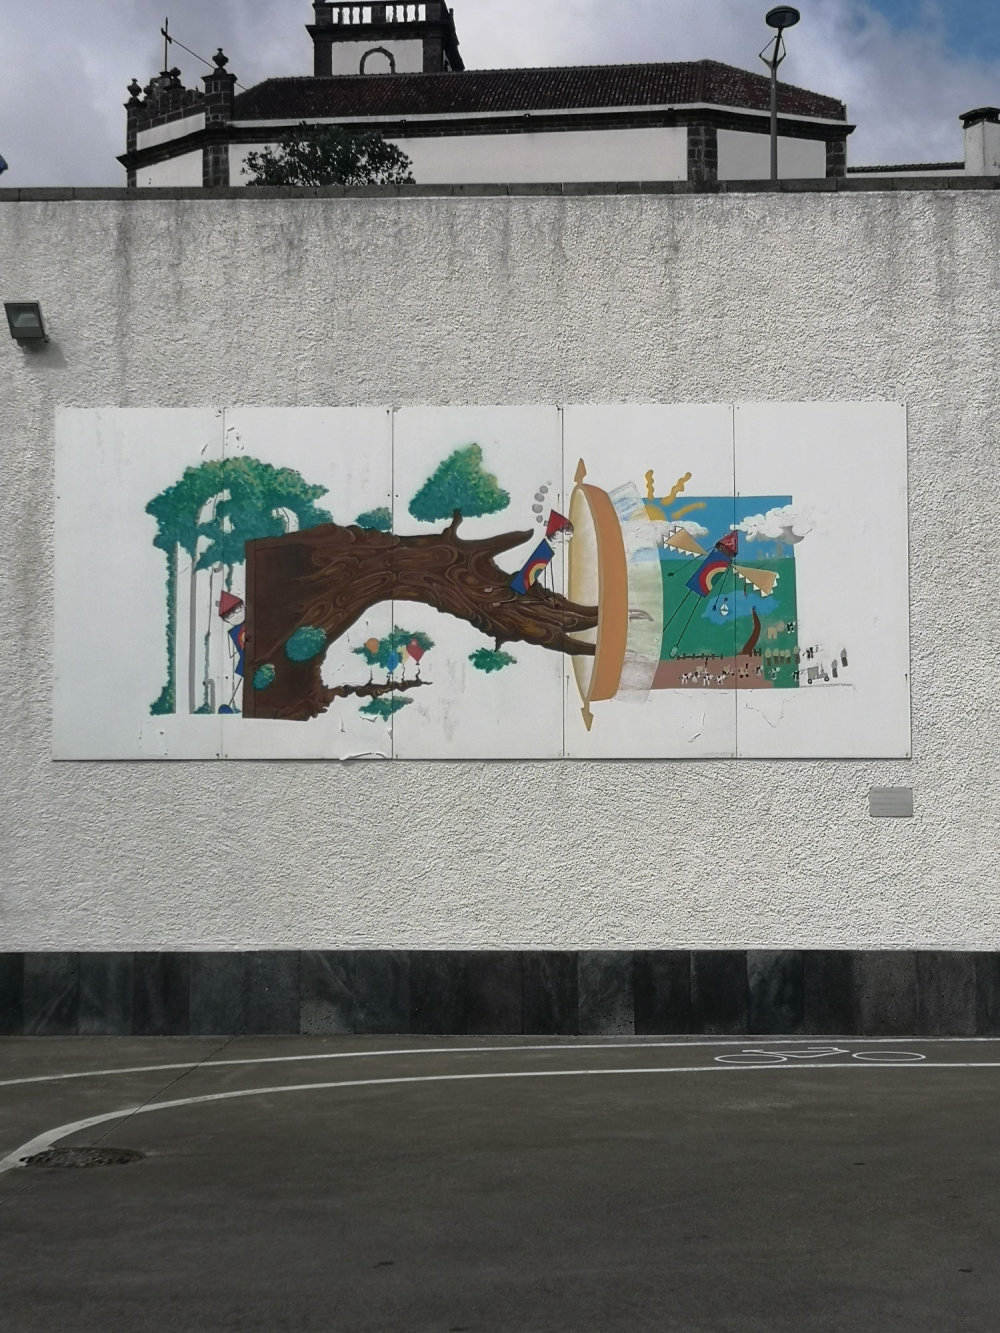 mural in Ponta Delgada by artist unknown.